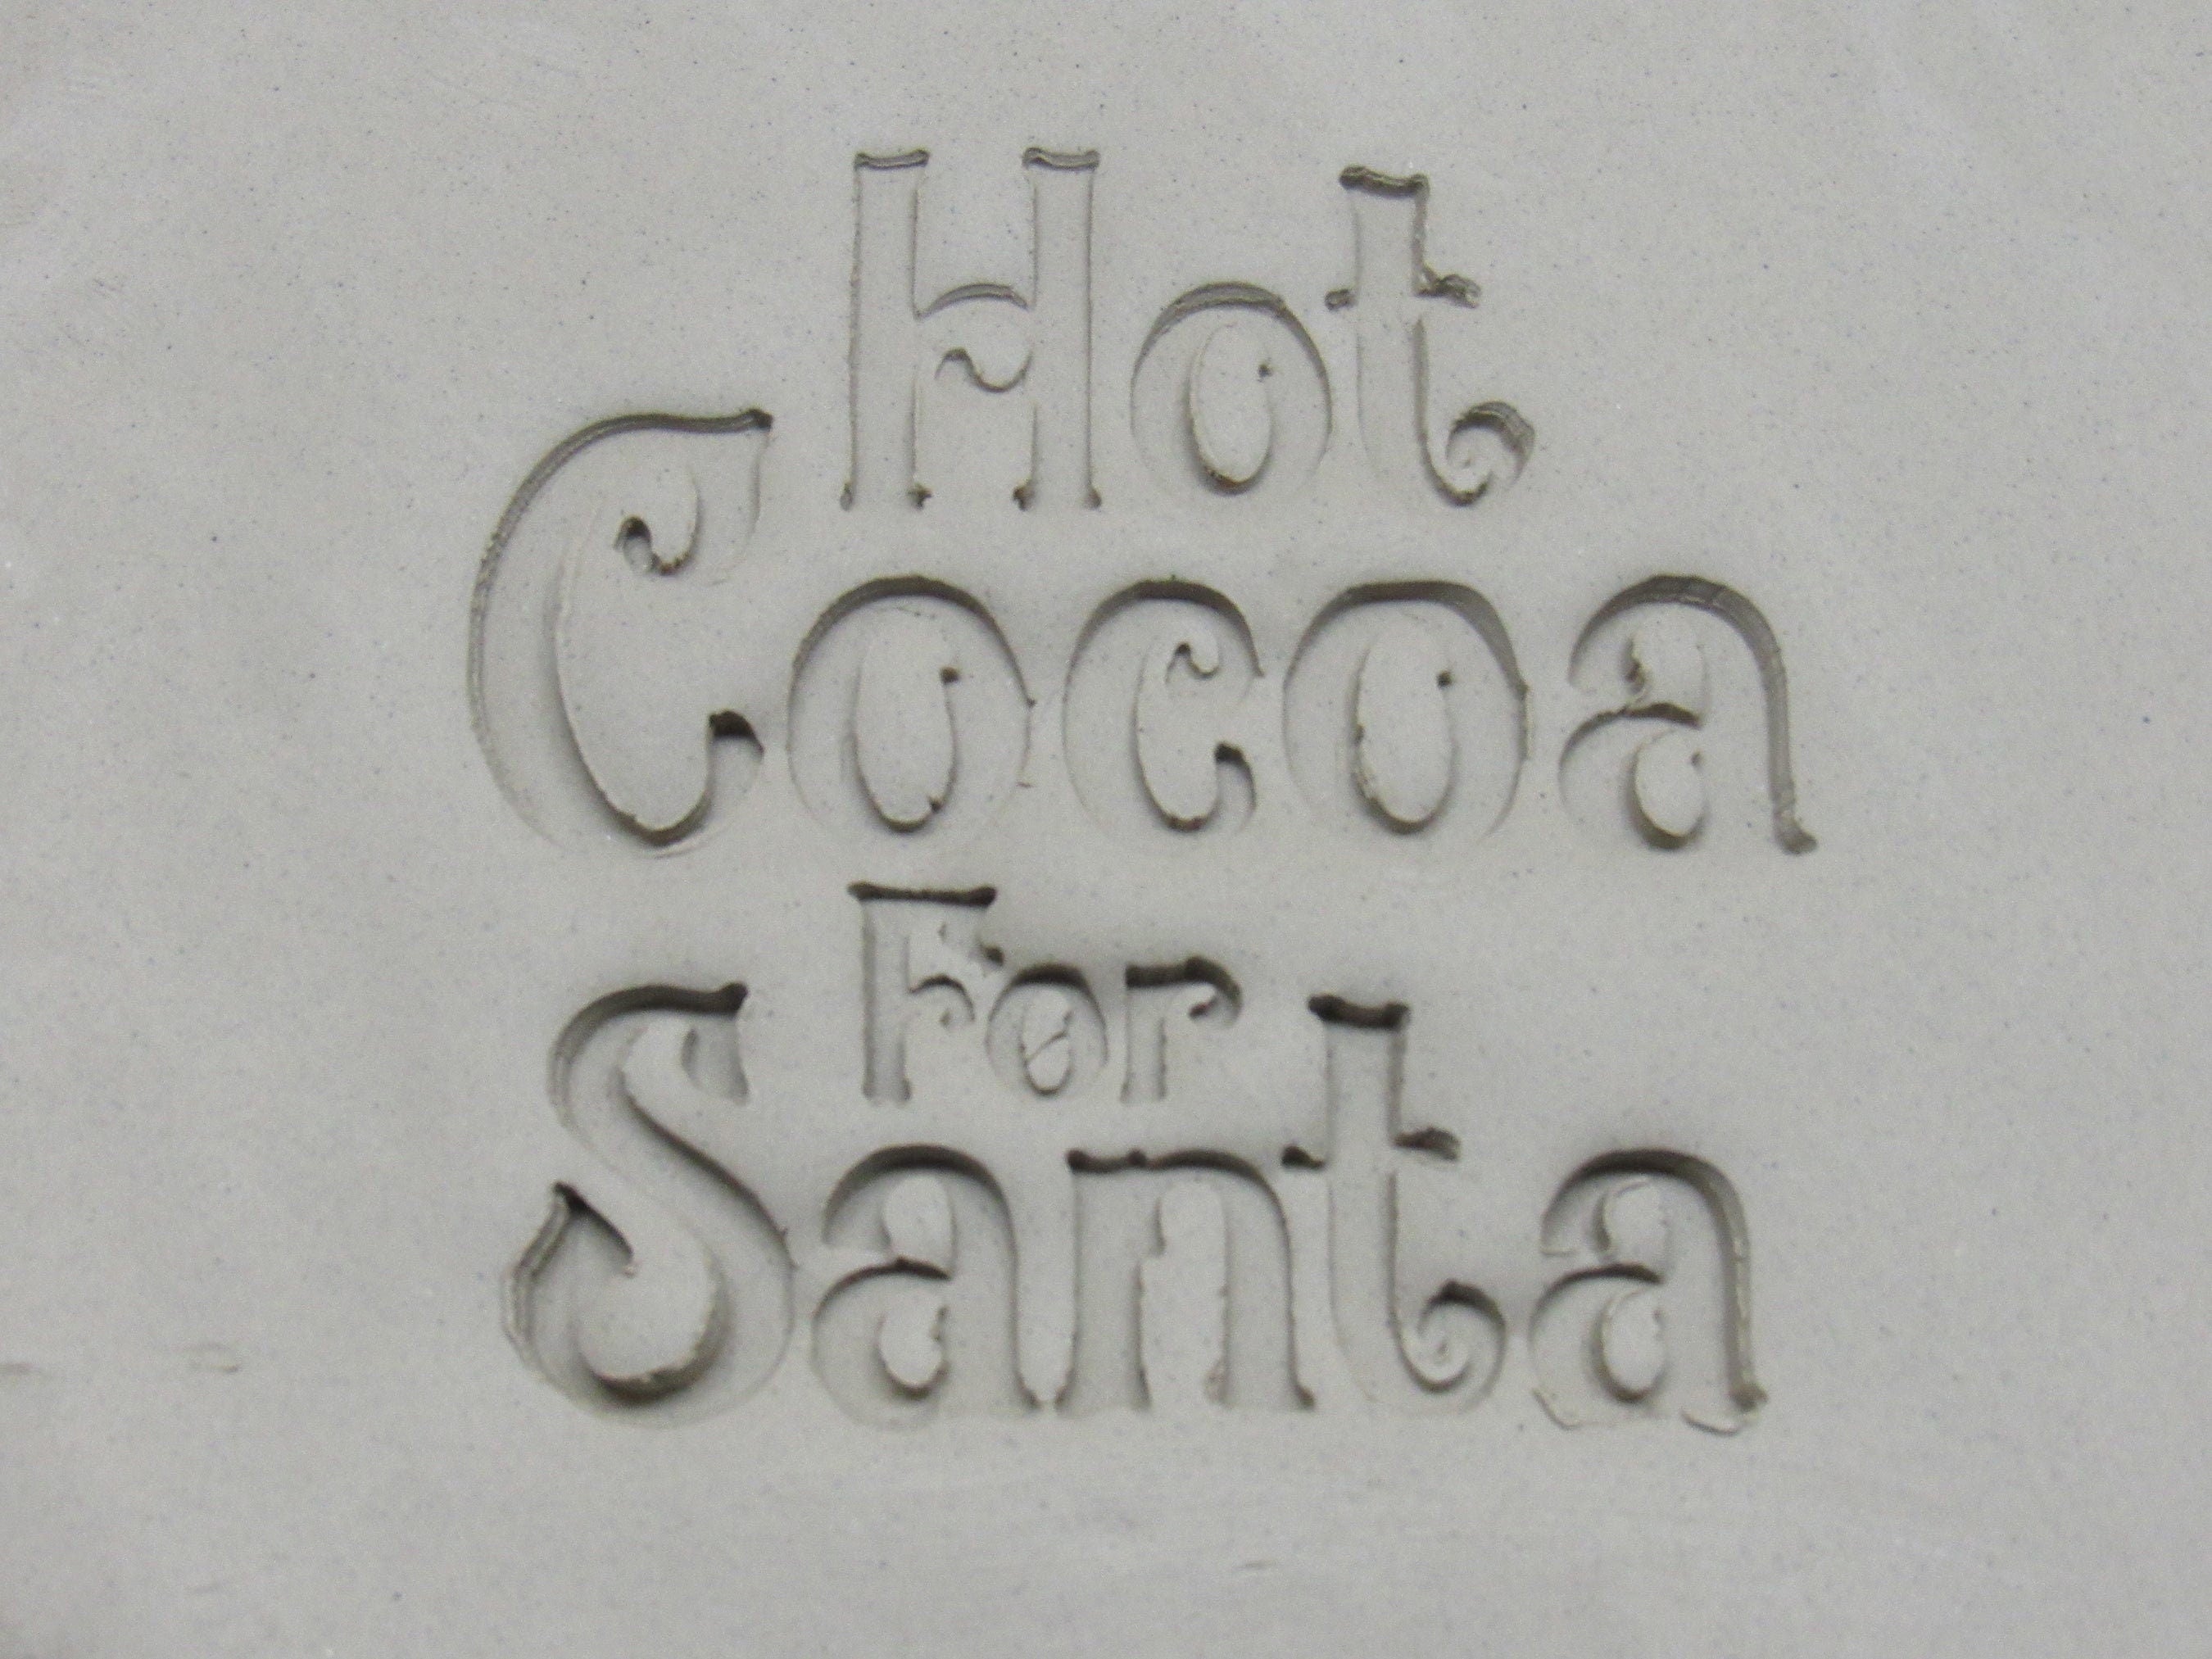 Hot Cocoa for Santa Mug Clay Stamp for handbuild pottery